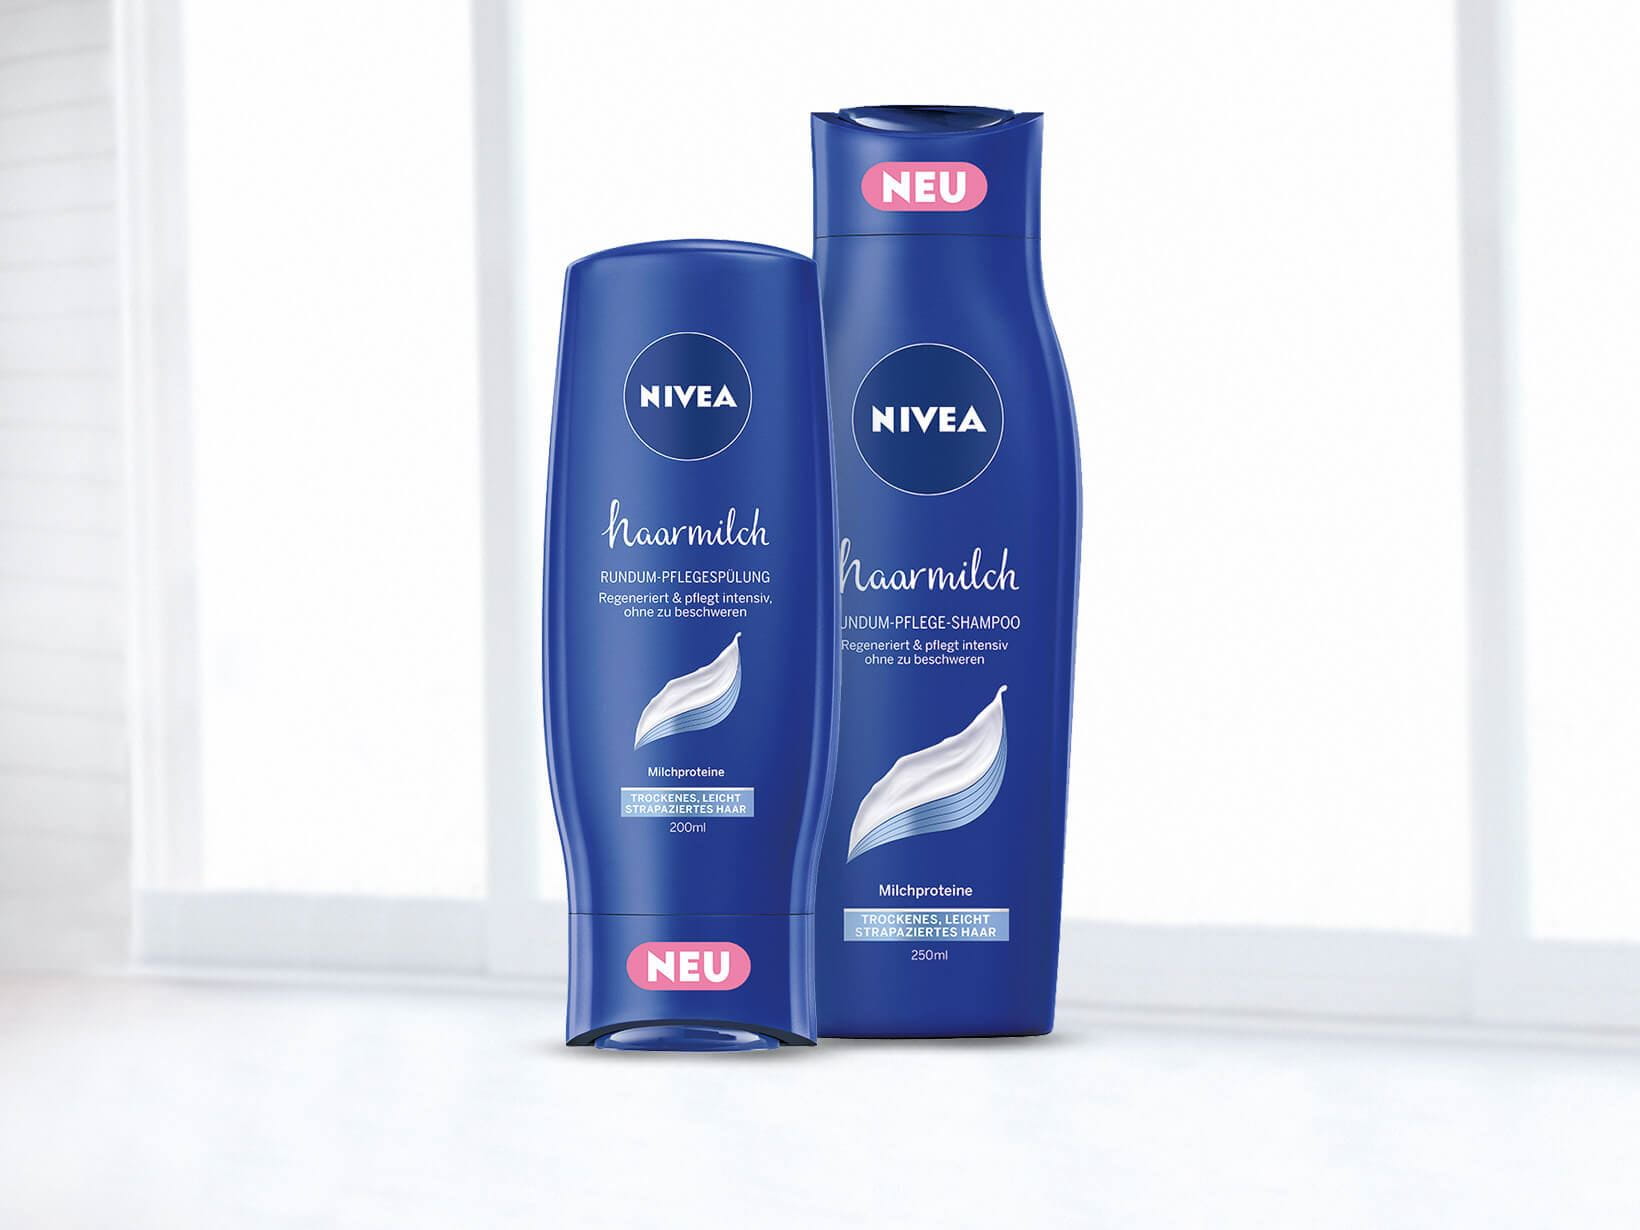 NIVEA Haarmilch Shampoo und Spülung